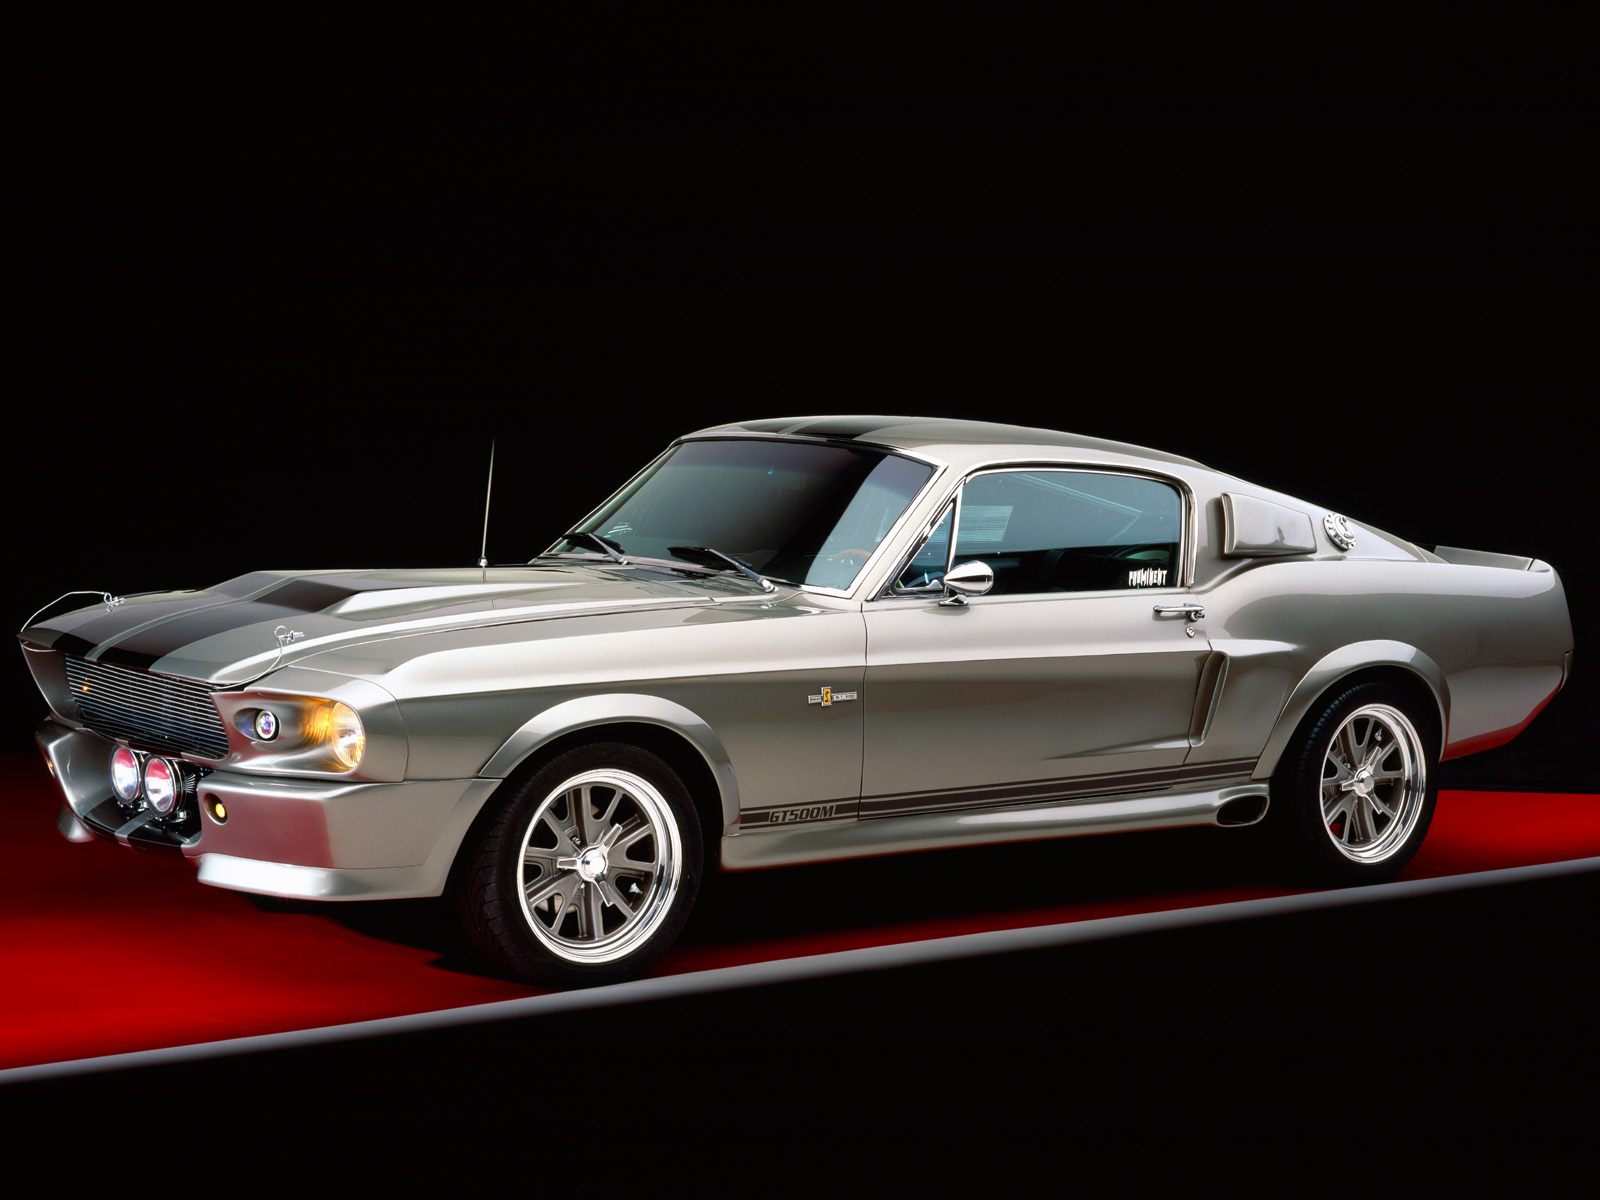 Free Desktop wallpaper downloads Ford Mustang car   Huge collection of